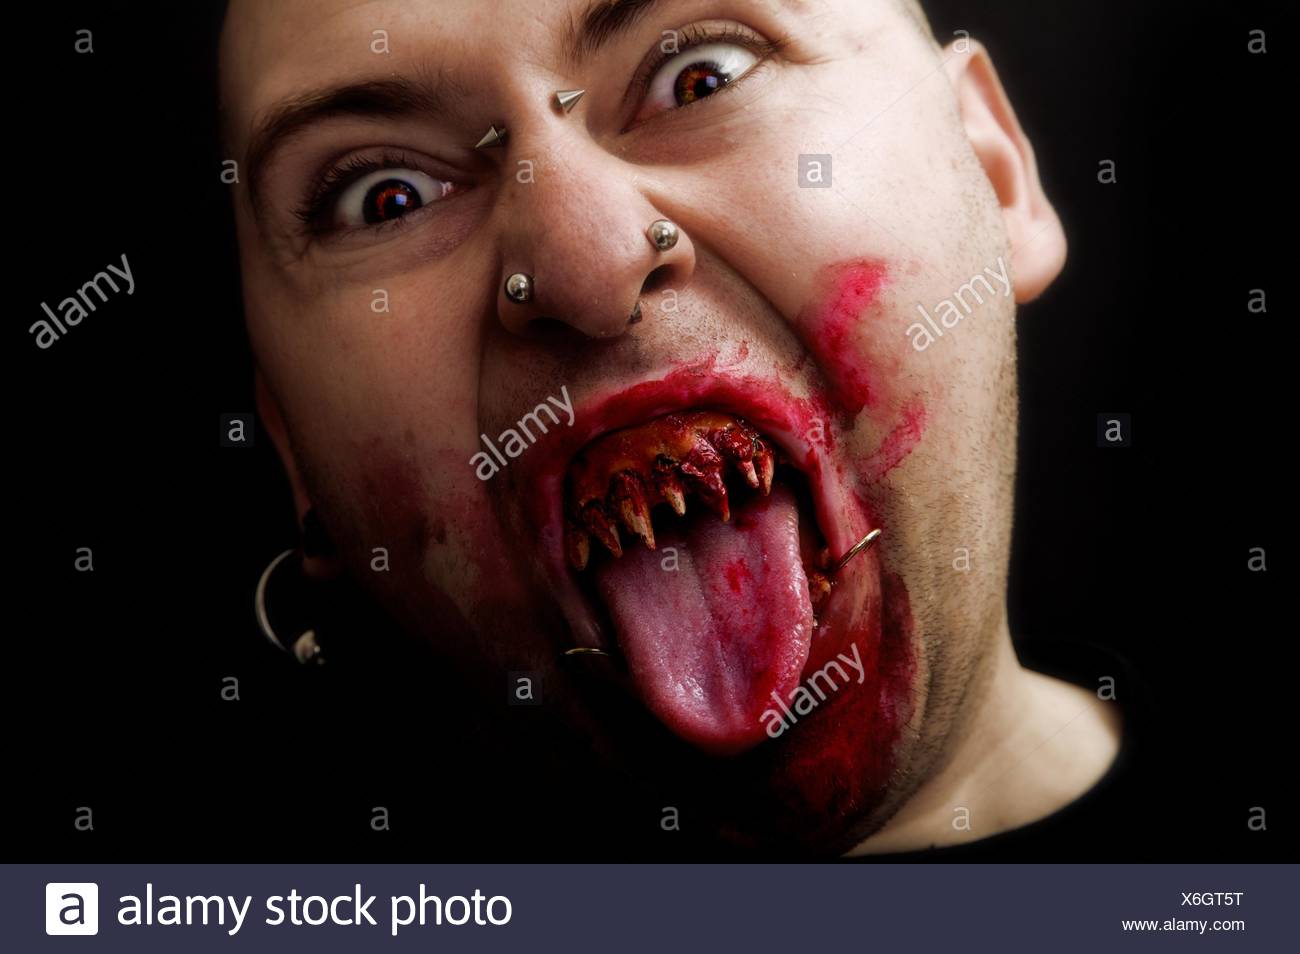 Kunst Savoir Vivre Zahne Augen Dunkel Halloween Horror Blut Piercing Drehen Gedreht Stockfotografie Alamy